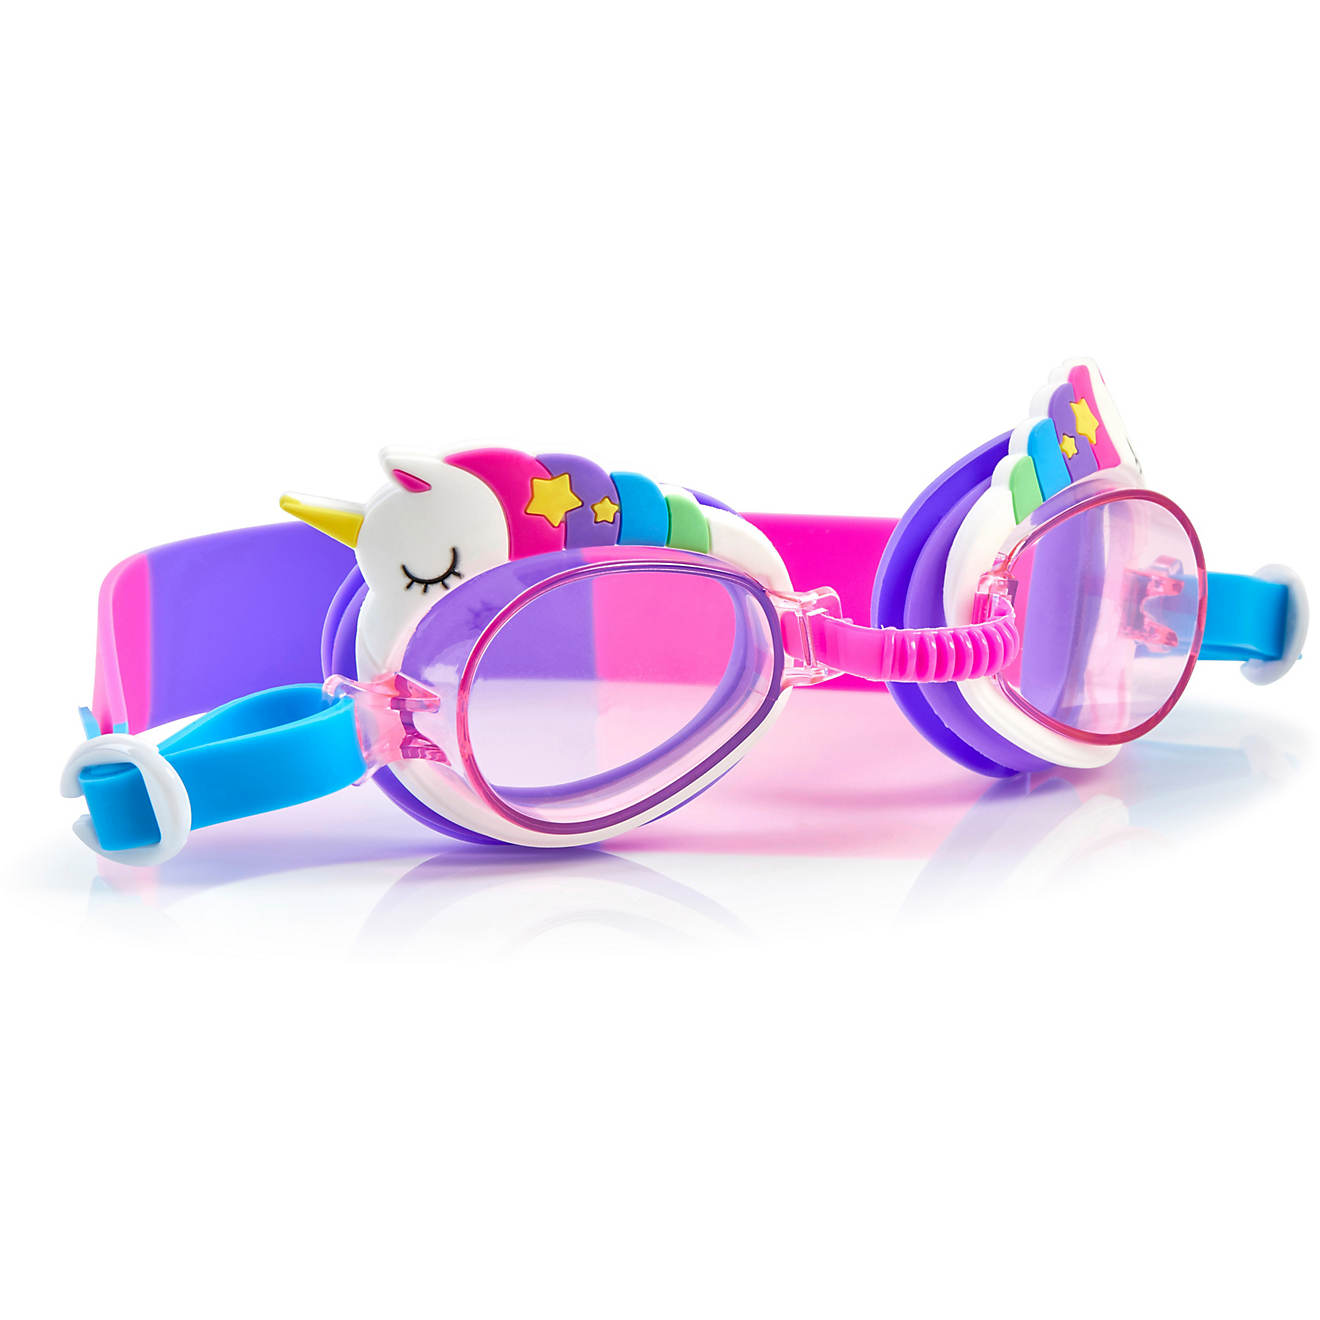 Fun swim goggles for kids: Unicorn goggles at Academy Sports